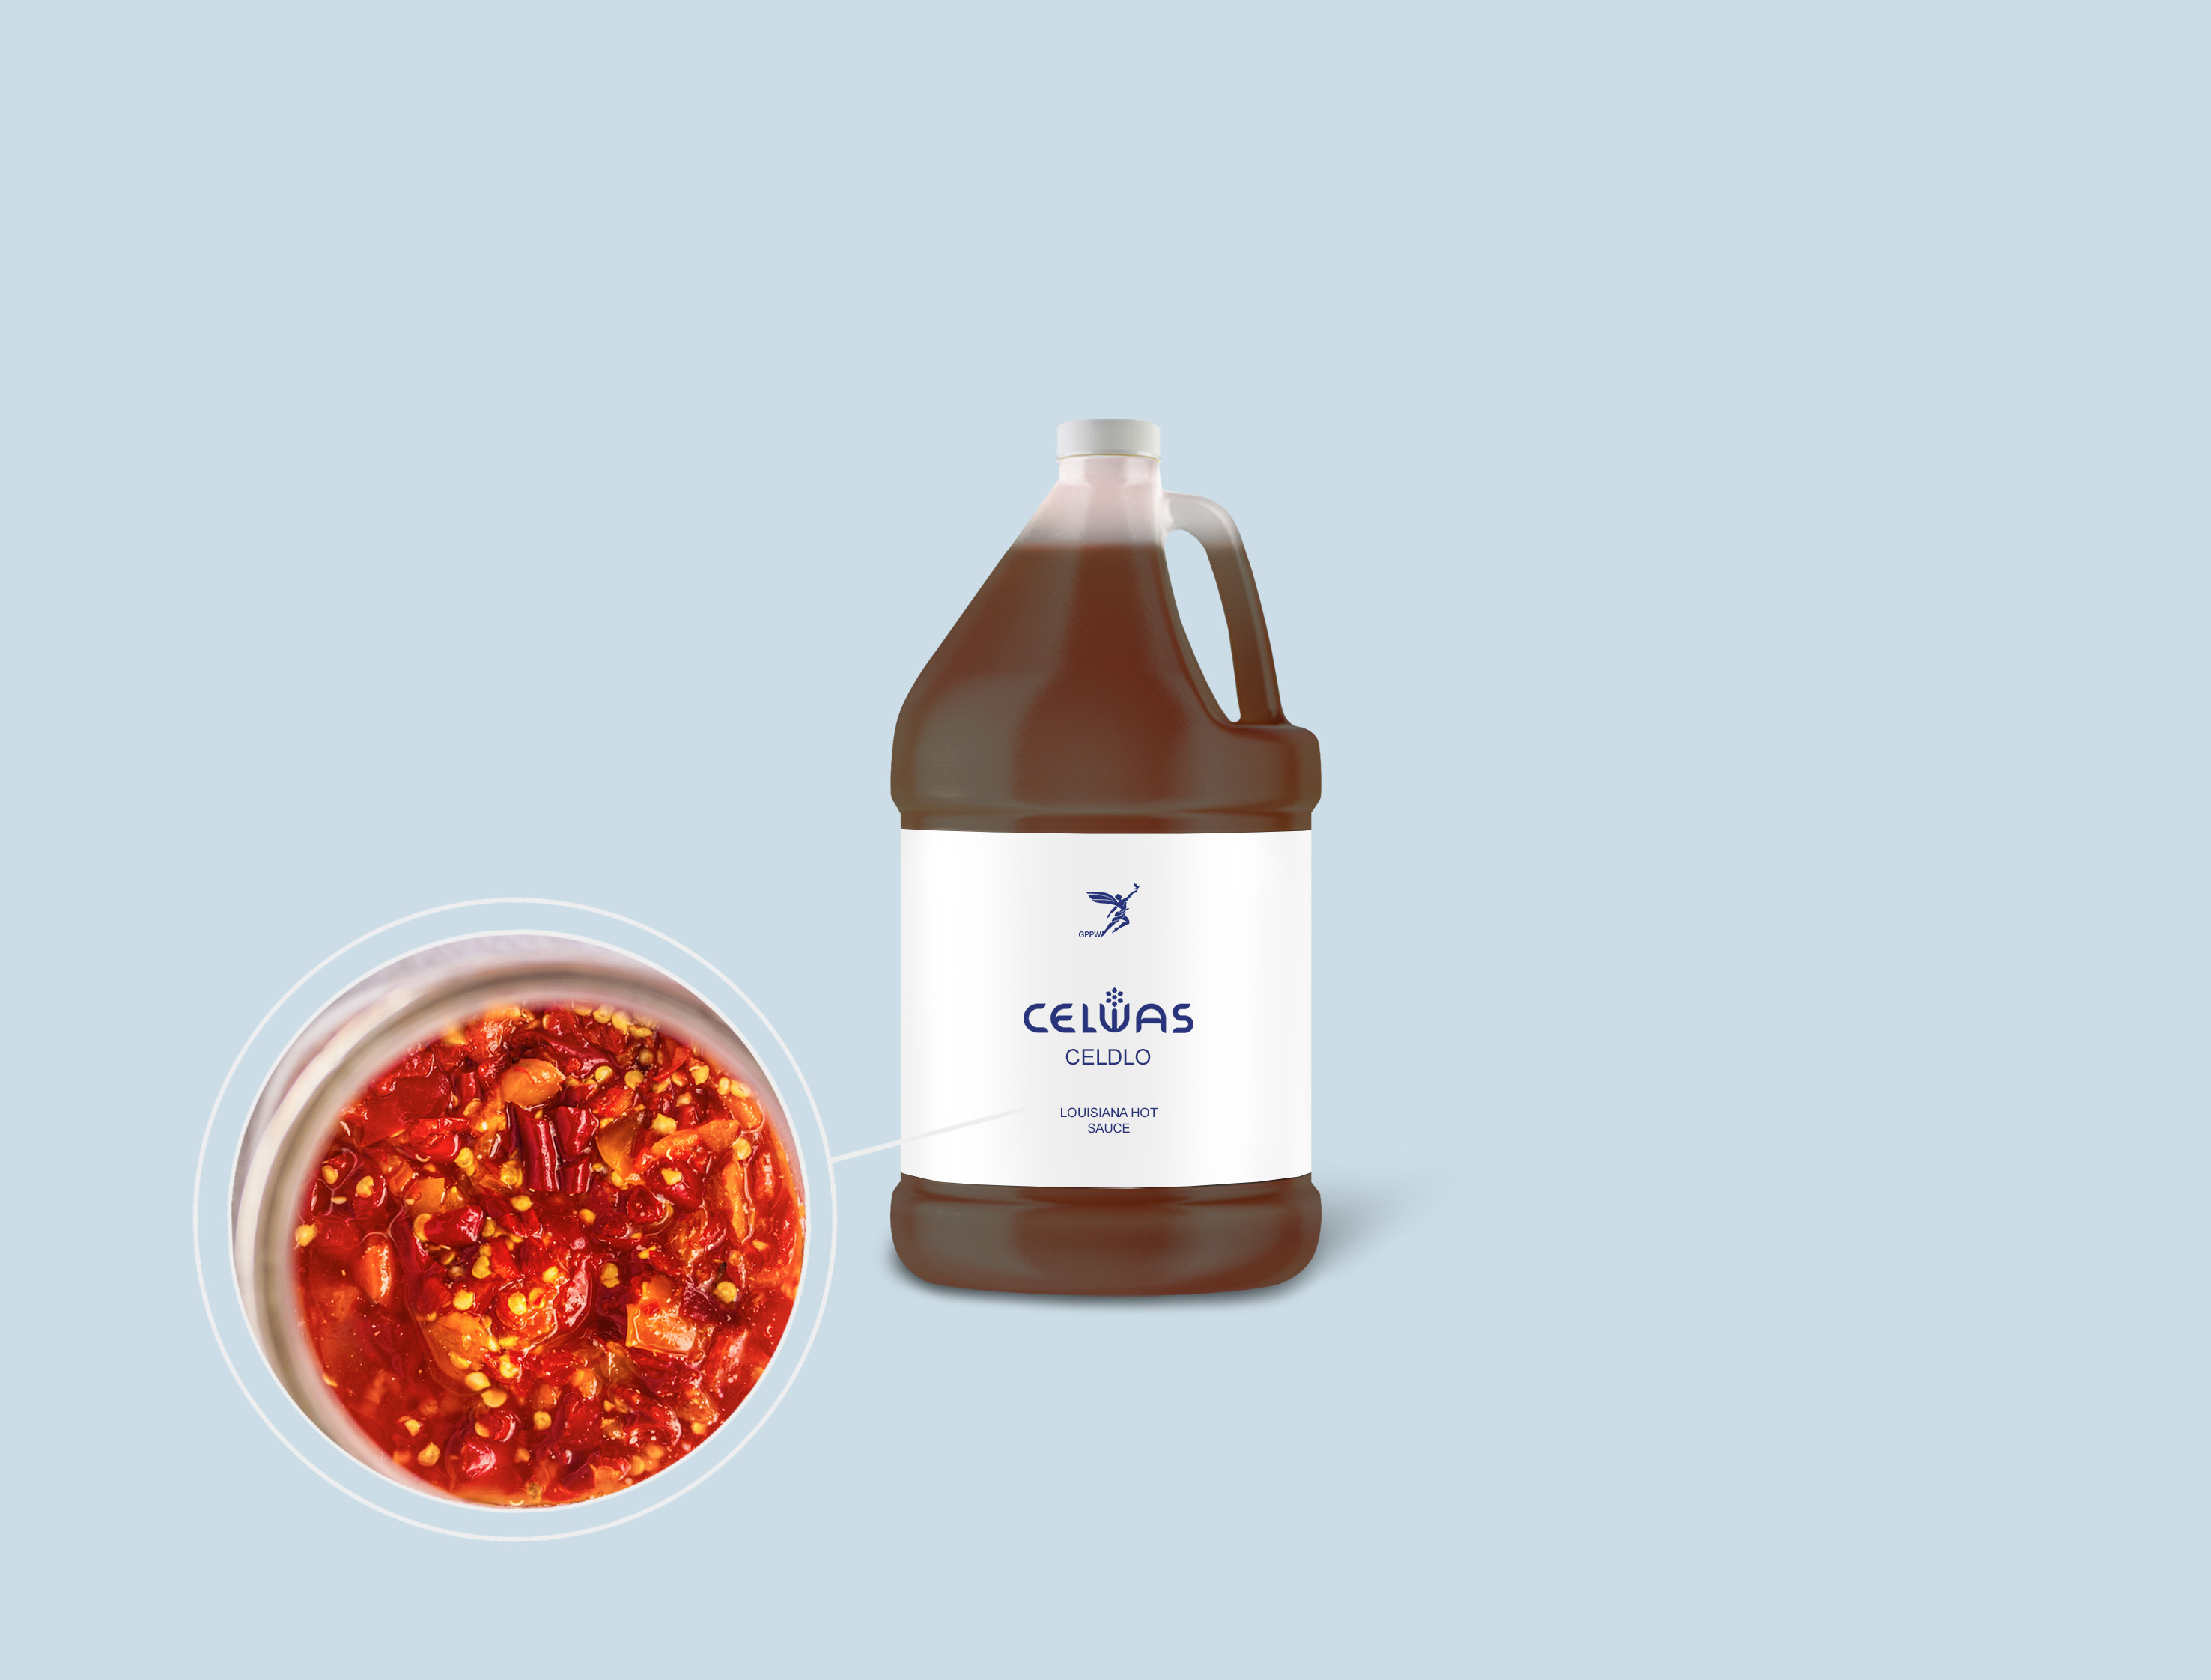 CELDLO<br />louisiana hot sauce